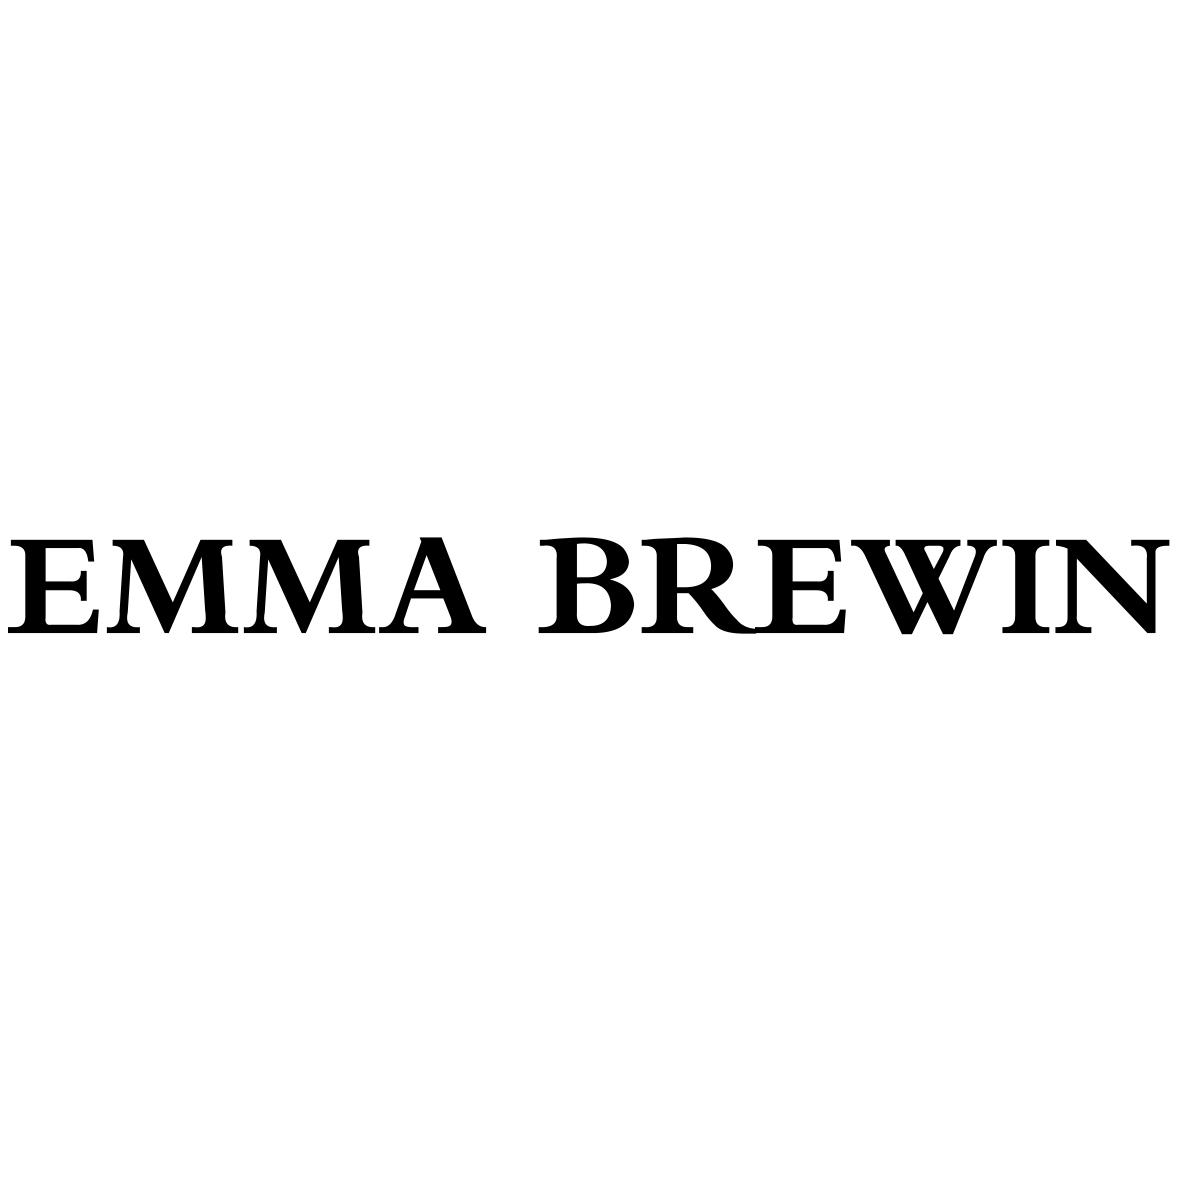 EMMA BREWIN